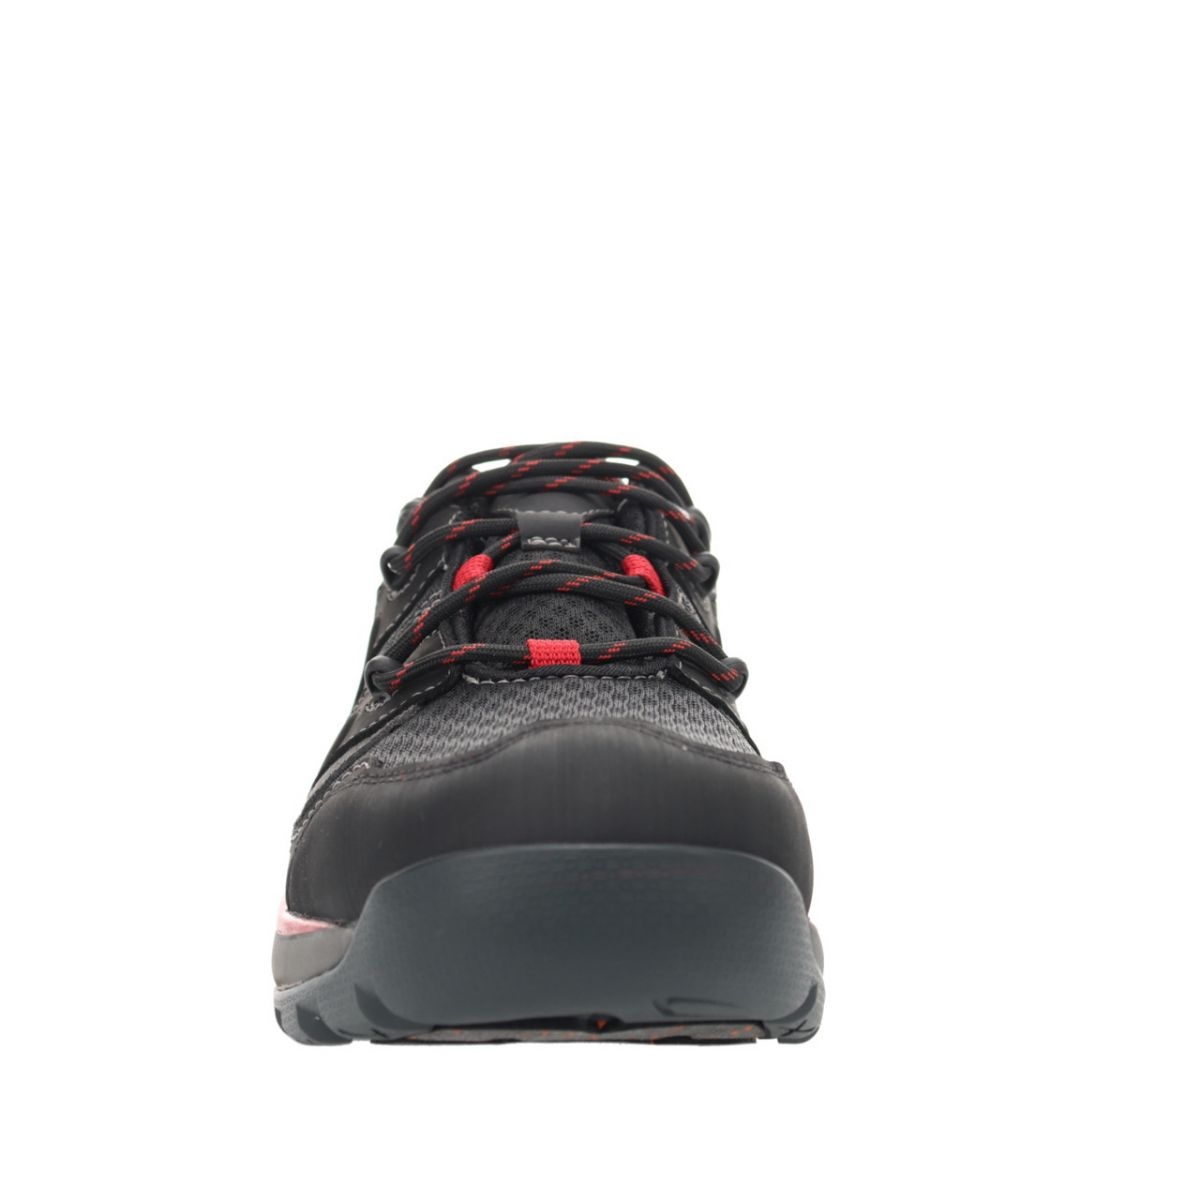 Propet Men's Vercors Hiking Shoe Black/Red - MOA002SBRD BLACK/RED - BLACK/RED, 15 XX-Wide